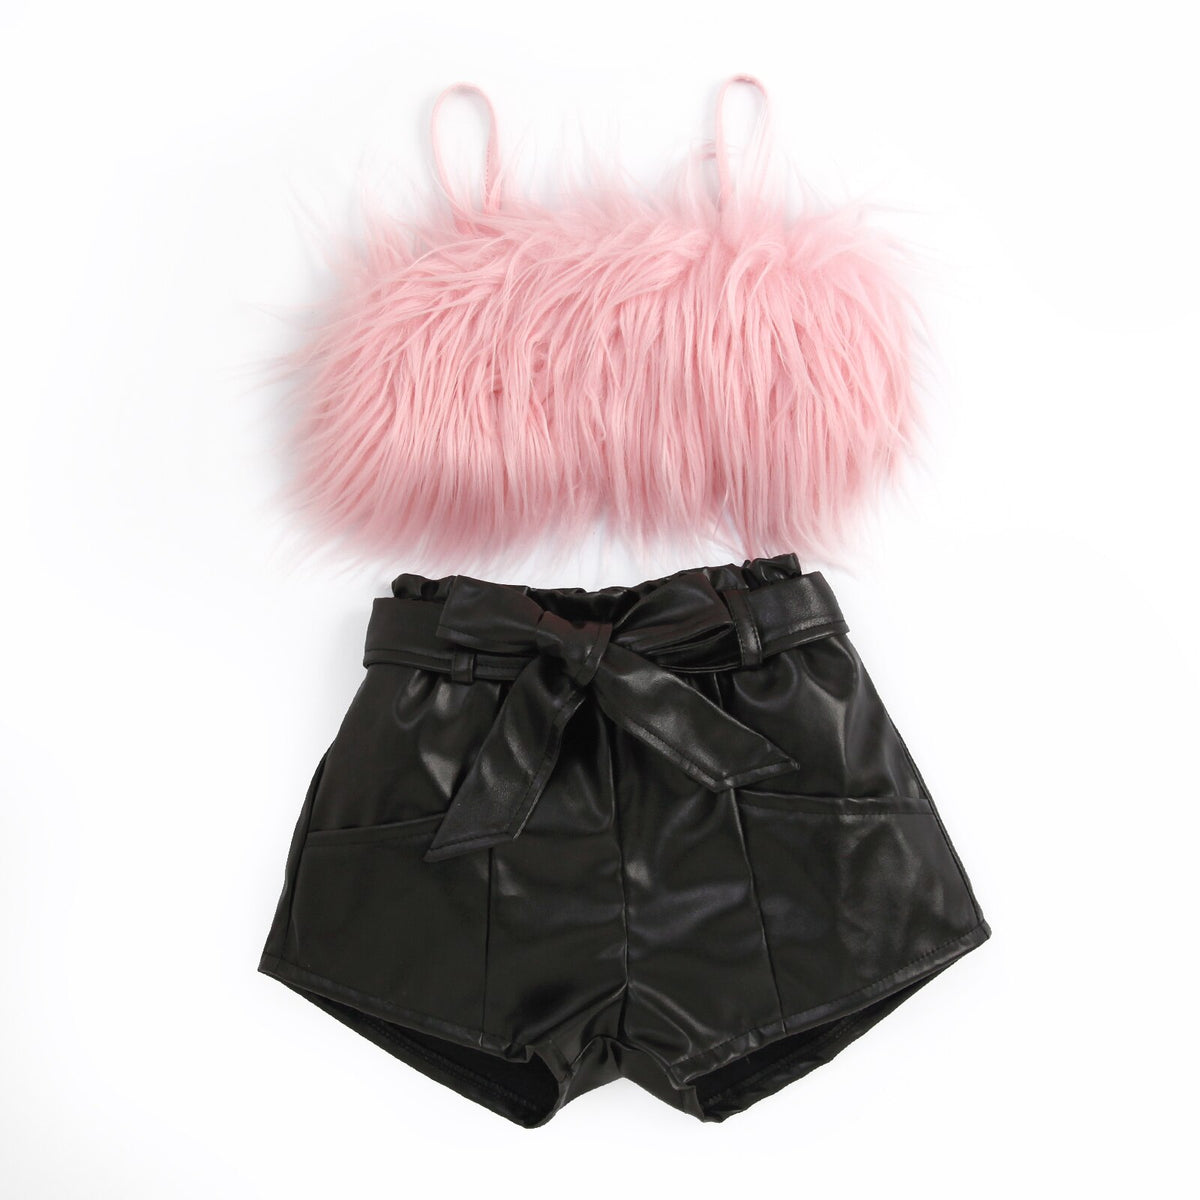 Gaga Crop Top Shorts Set - Bubba Kids Pink / 2T